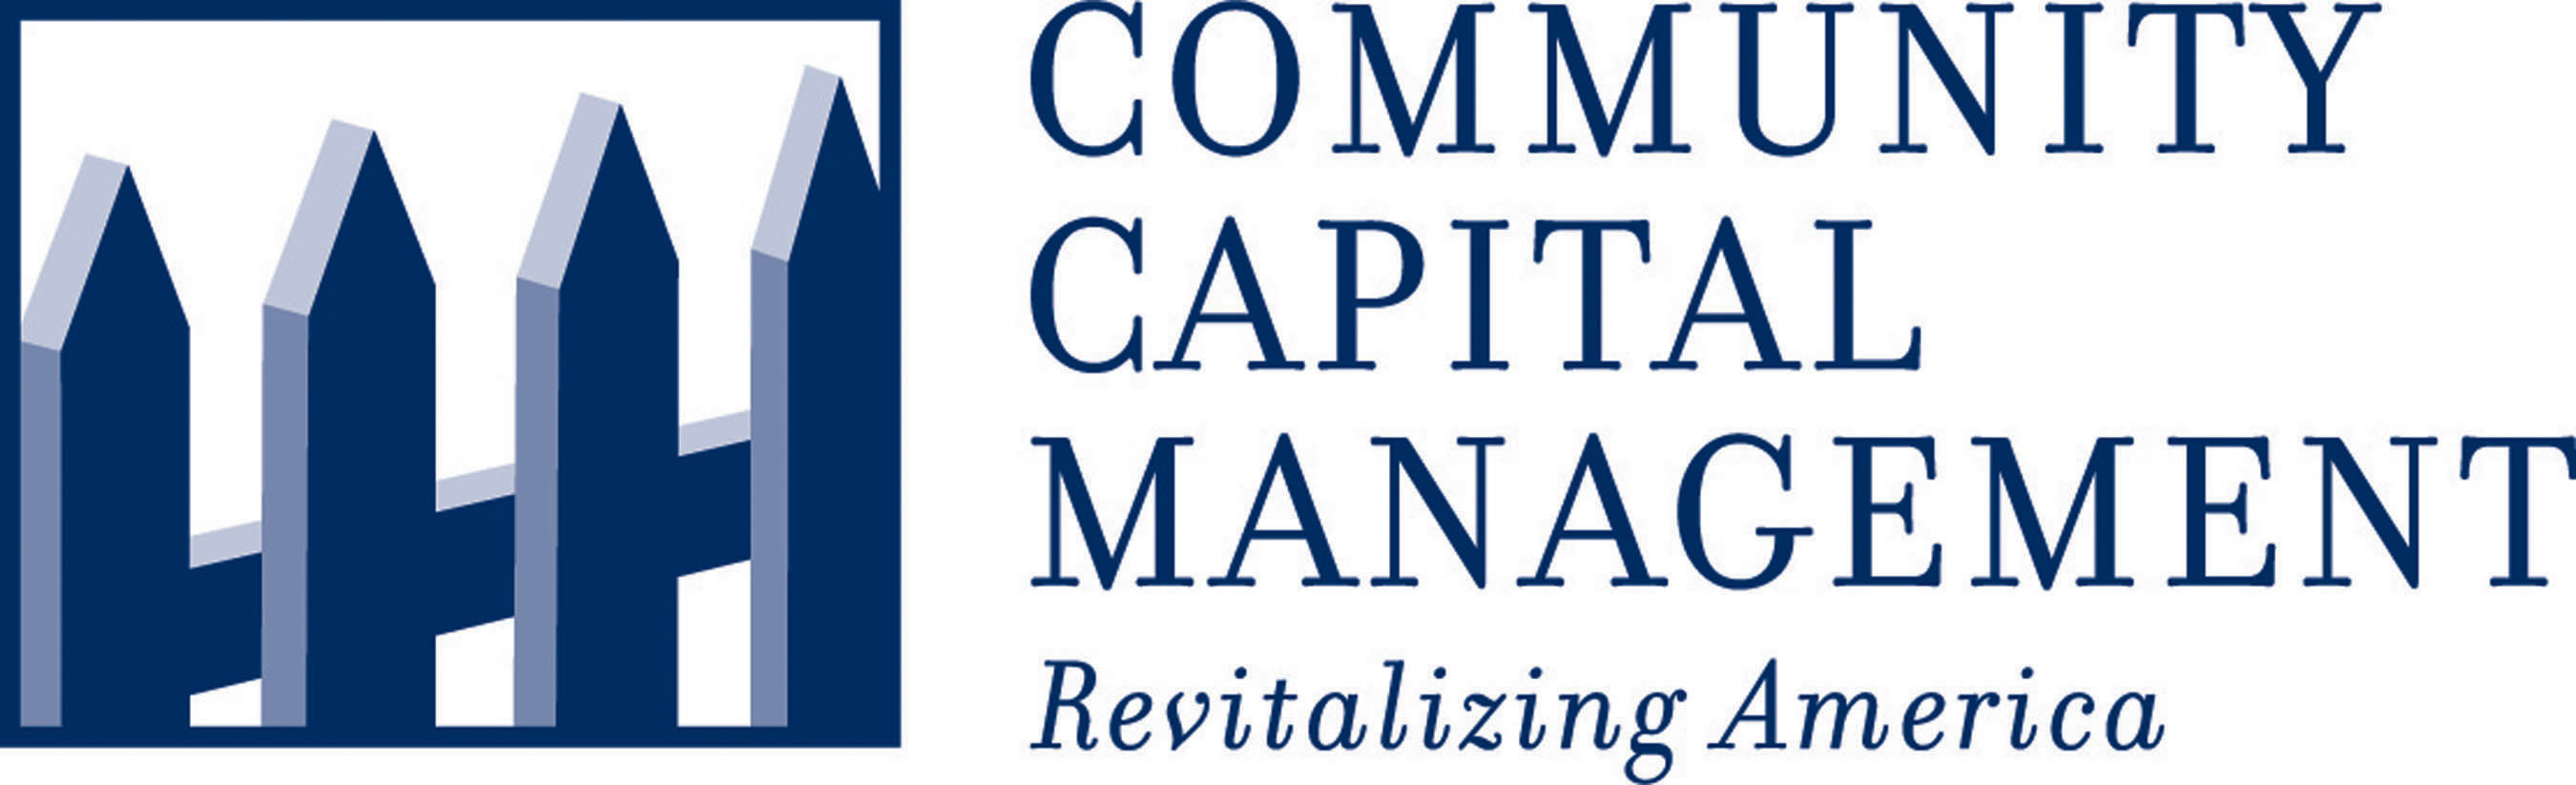 Community Capital Management Logo.